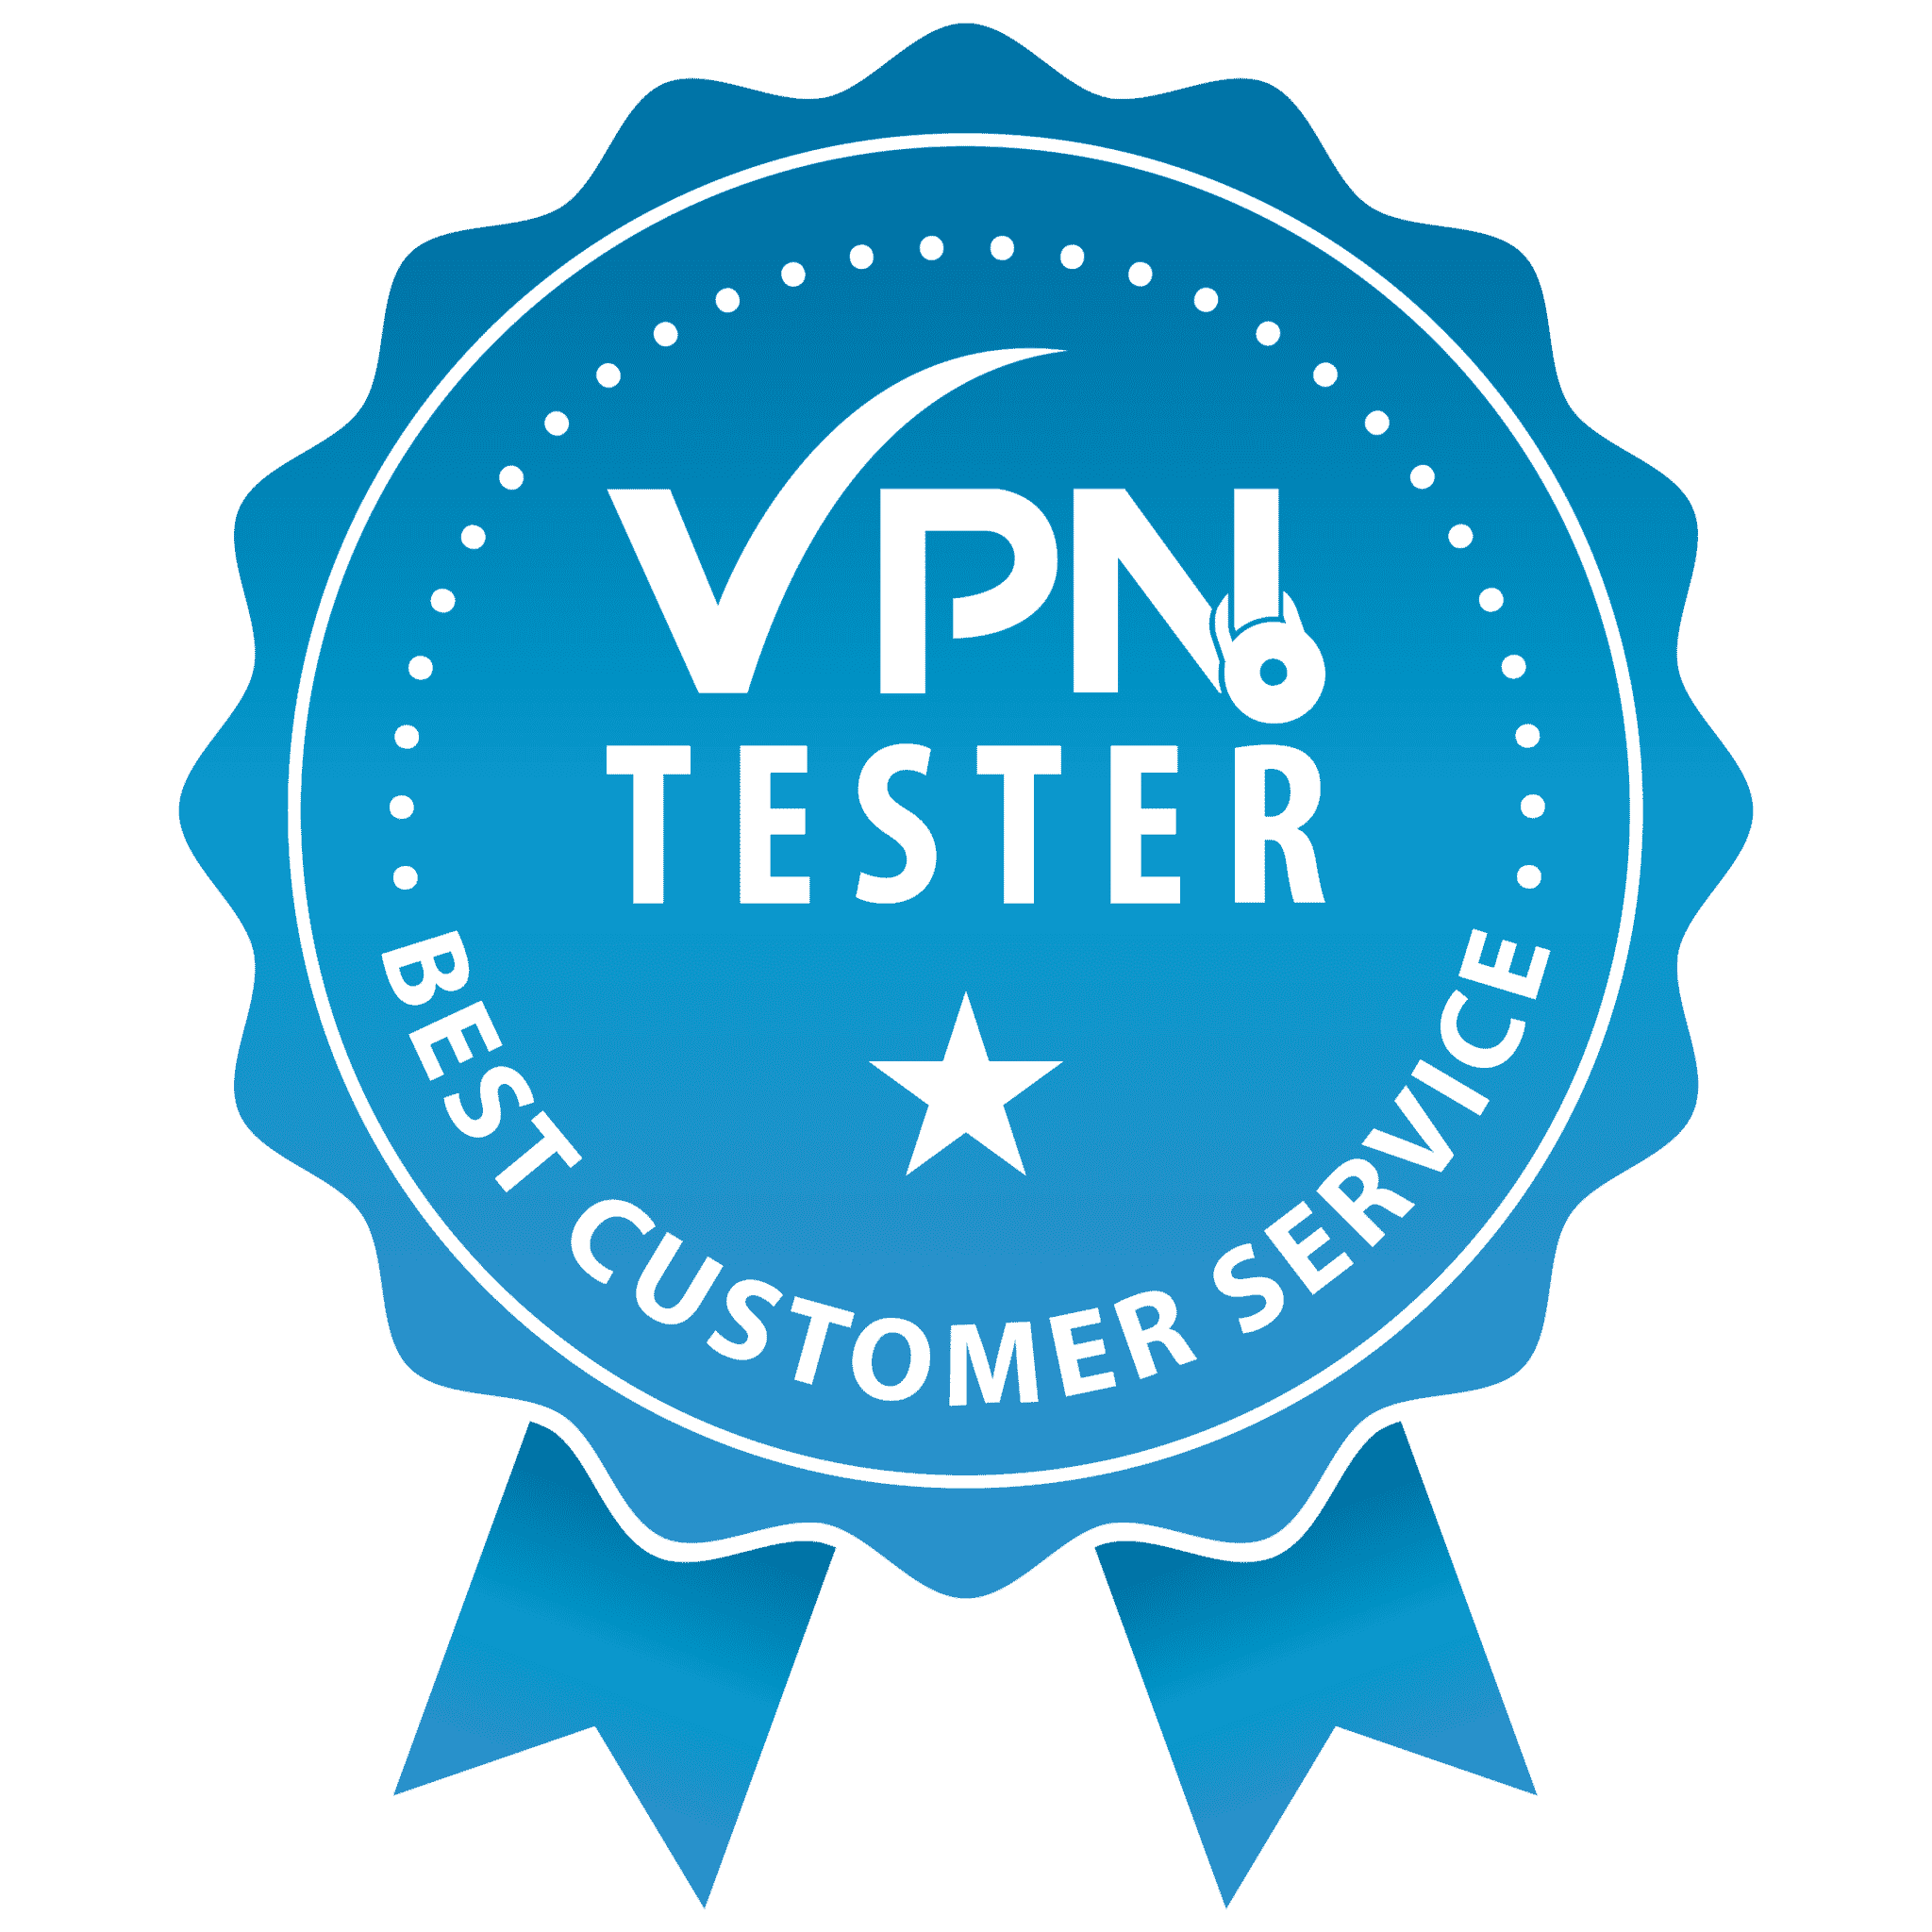  VPNtester Badge Best customer service